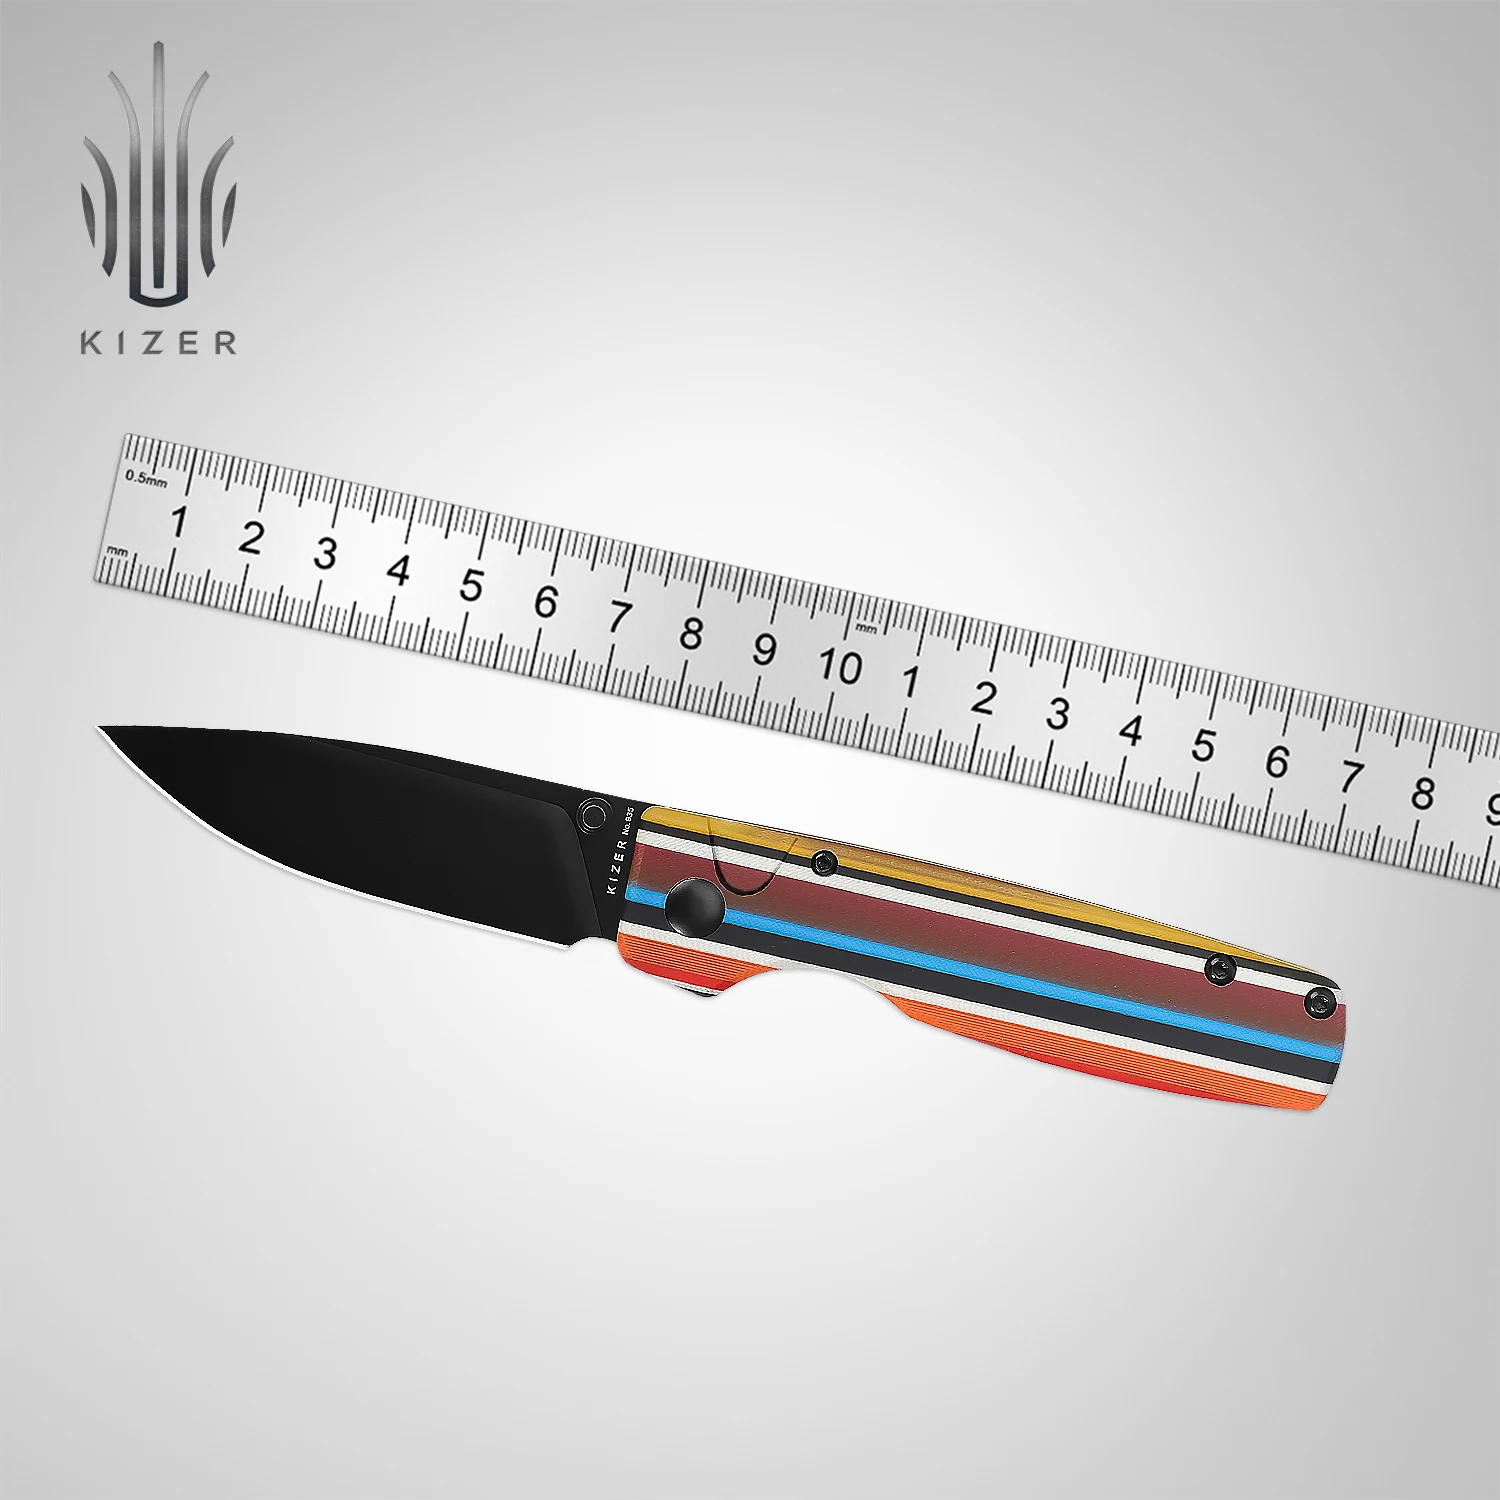 Serape Original 2.98-Inch G10 Micarta Handle Knife